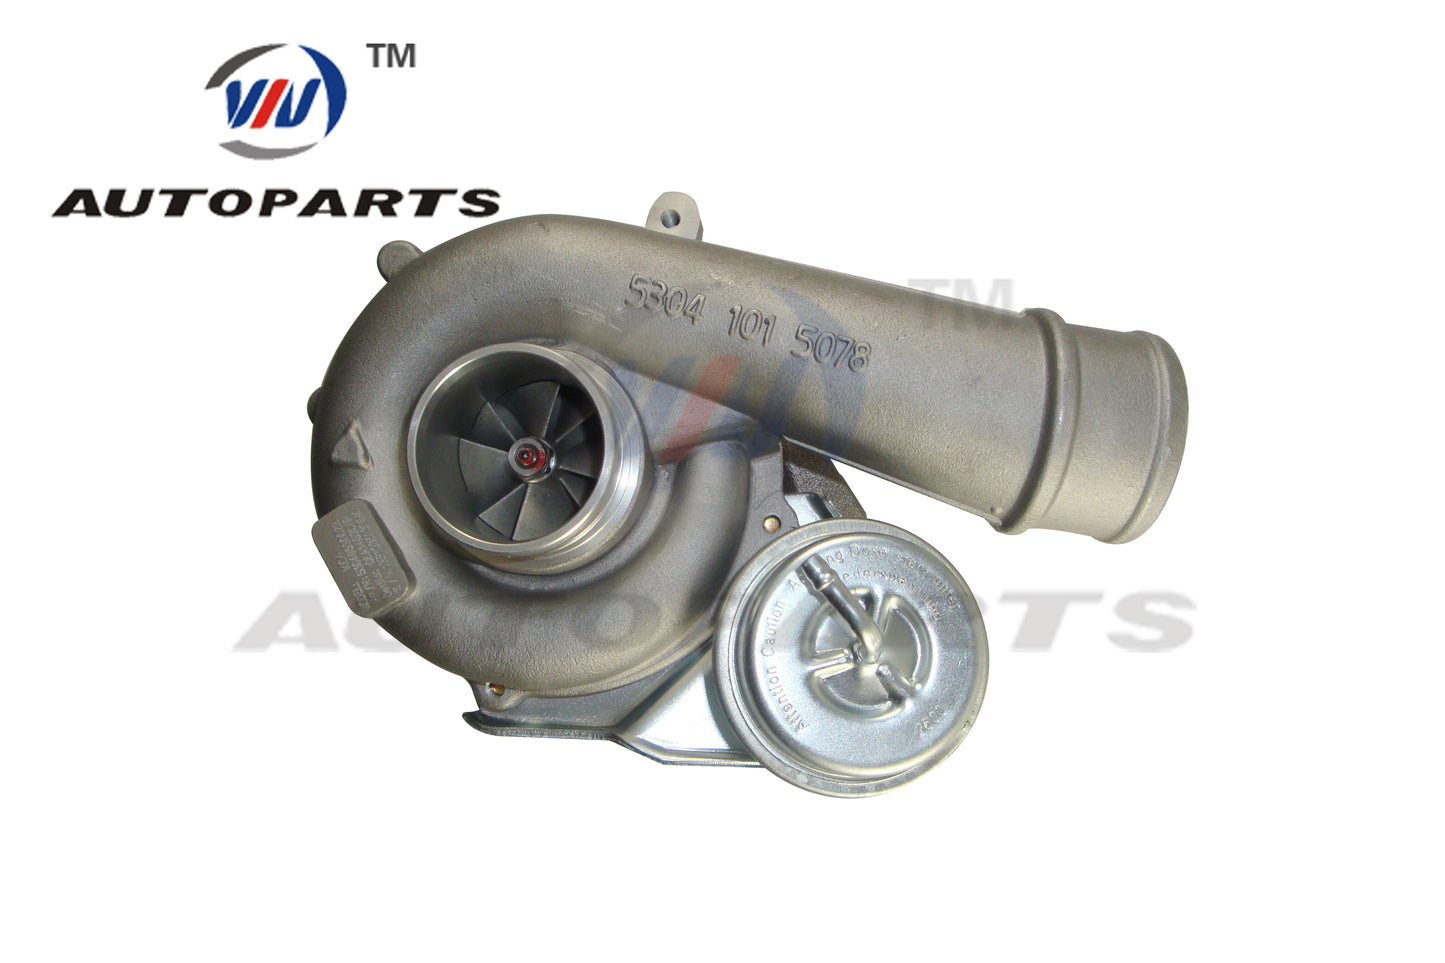 Turbocharger 53049880022 for Audi S3/TT Seat Leon 1.8L Gasoline Engine